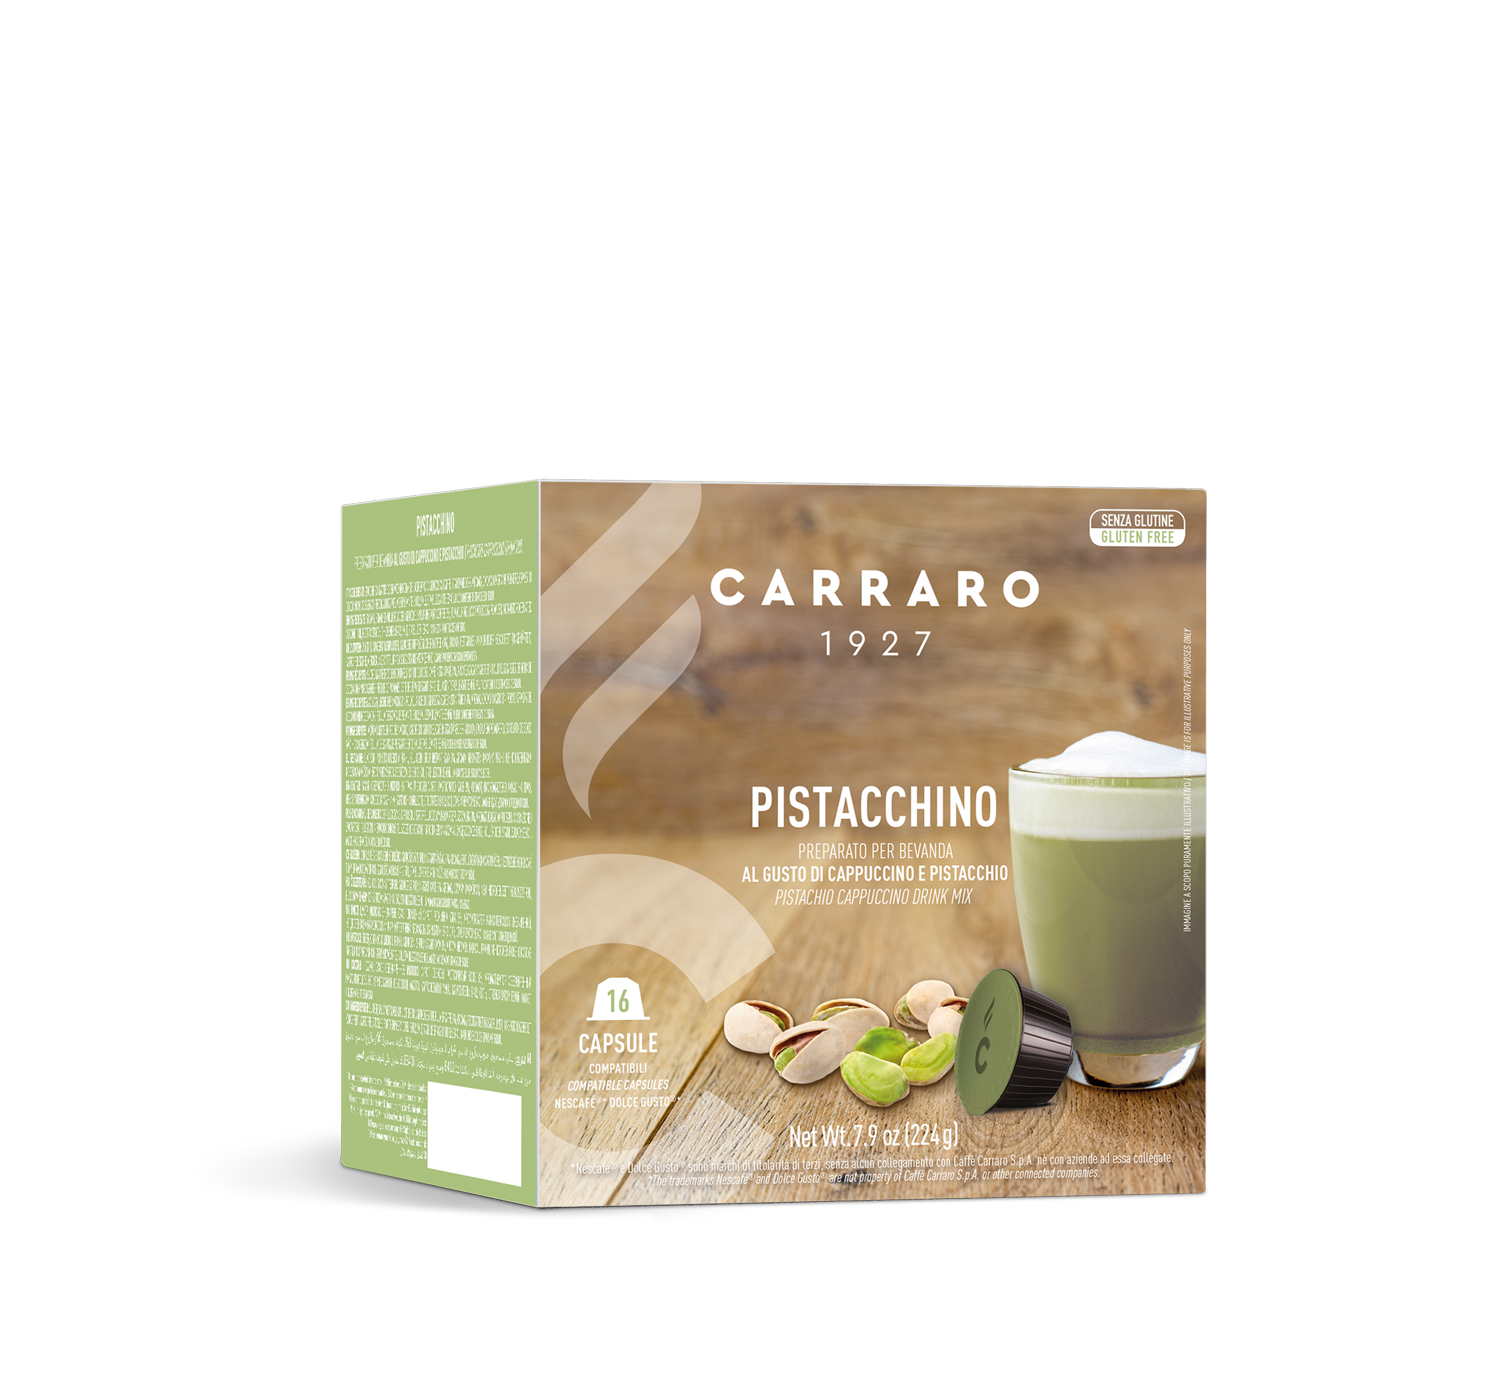 Capsules - Pistacchino – 16 Dolce Gusto®* compatible capsules - Shop online Caffè Carraro